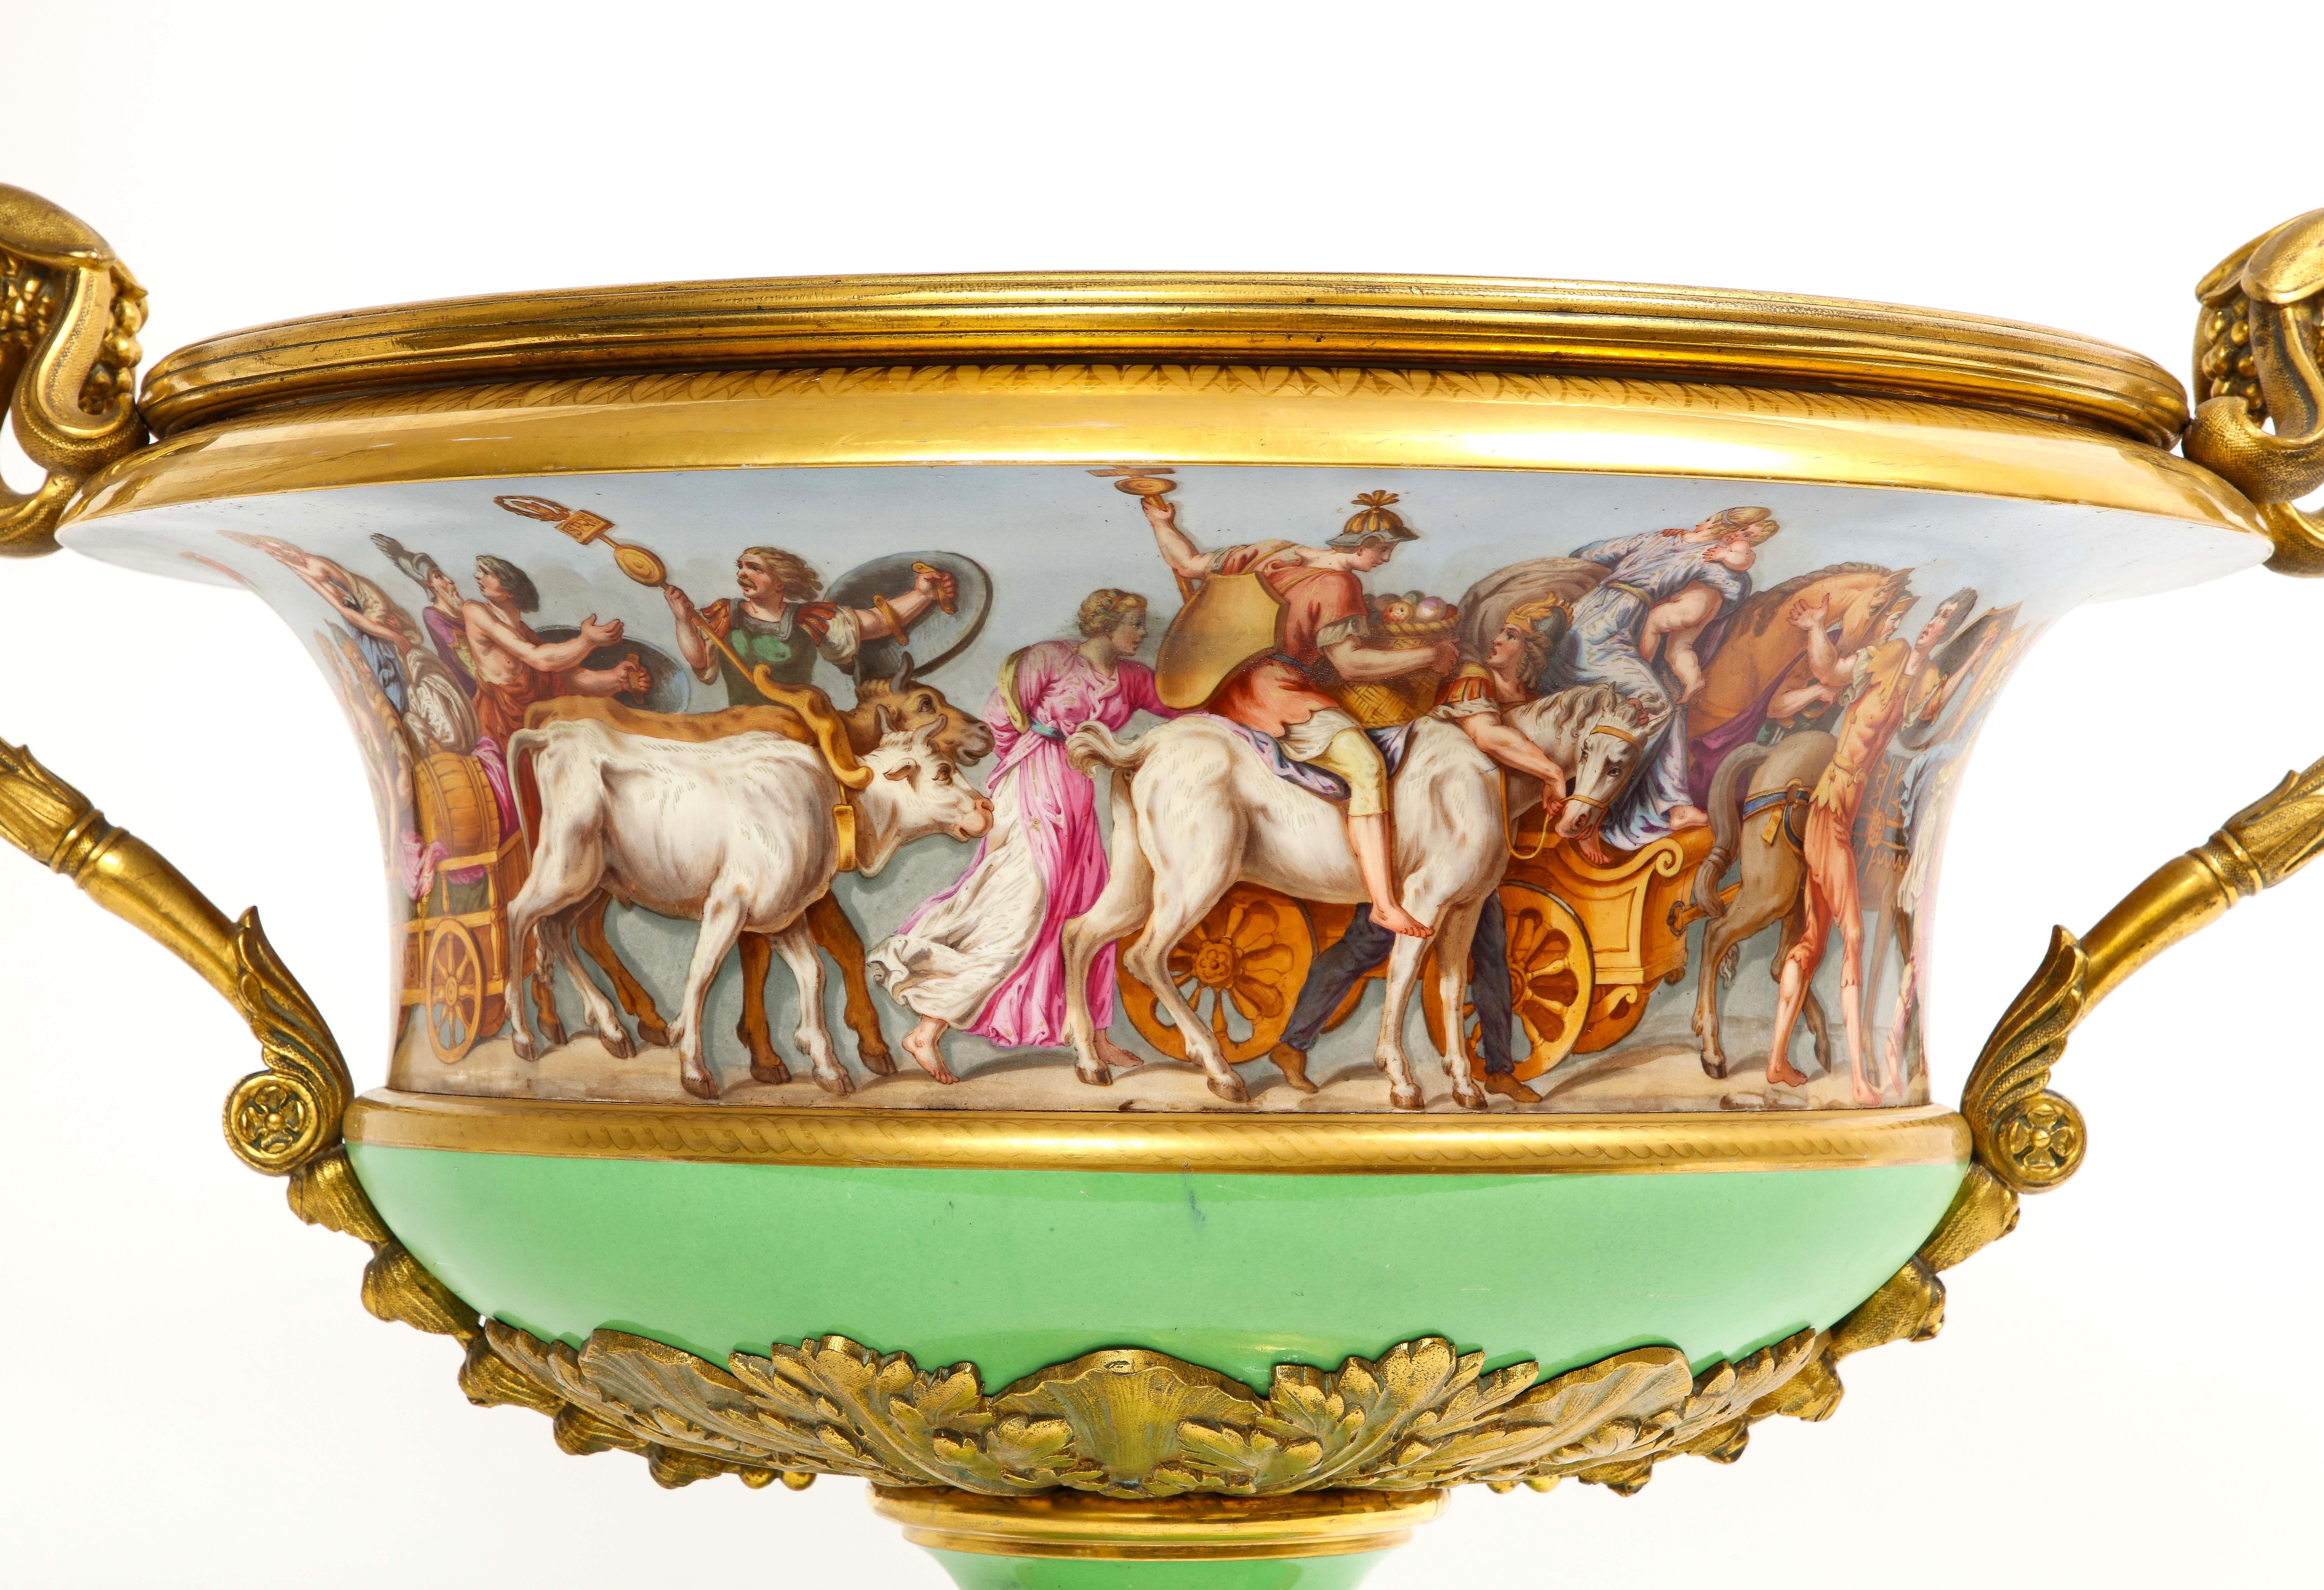 Monumental Sevres Porcelain Ormolu-Mounted 2-Handle Campana Form Centerpiece For Sale 1